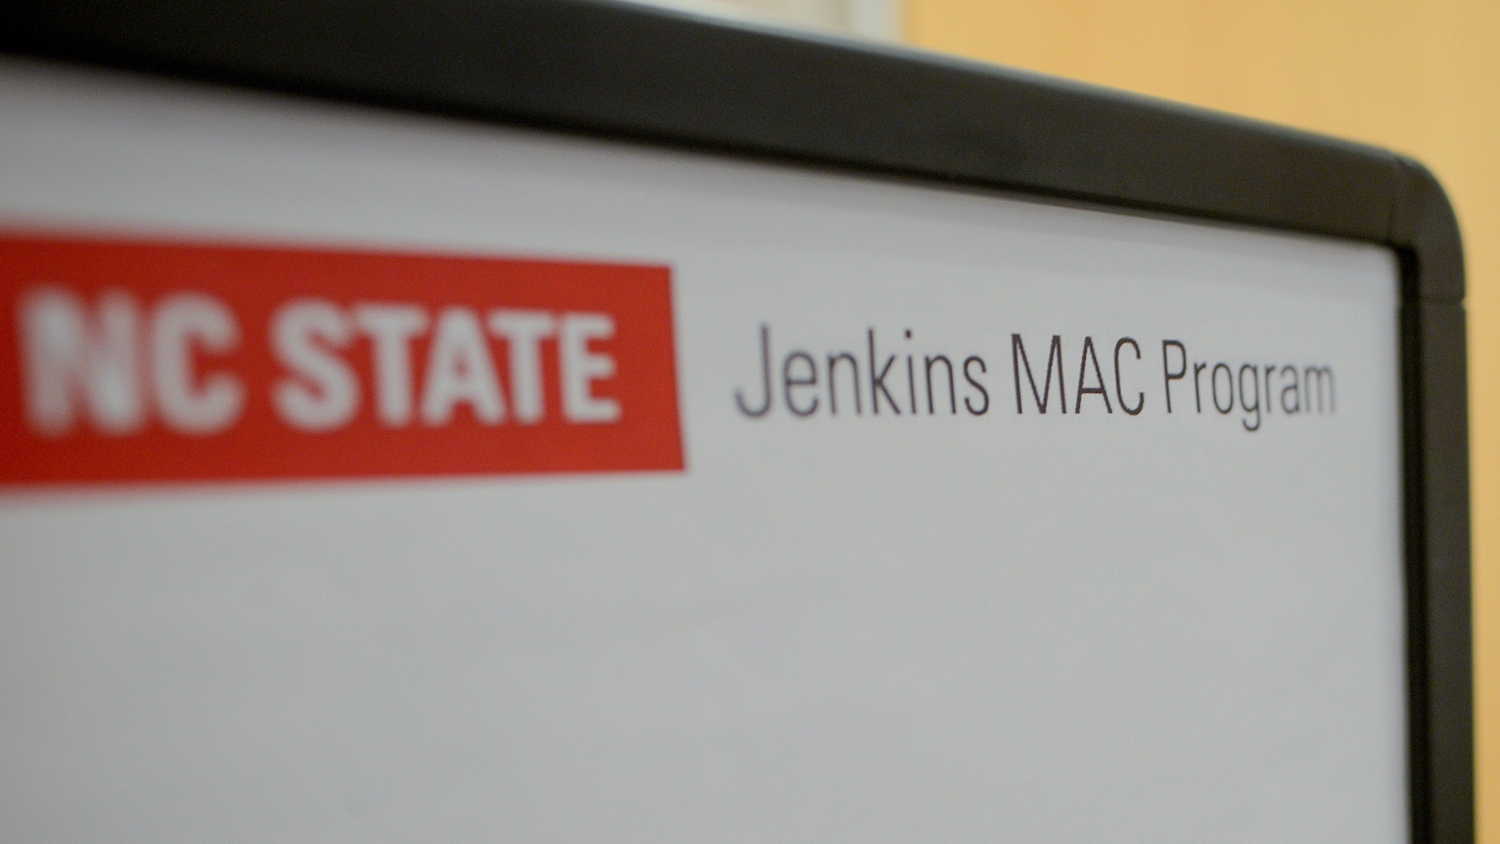 NC State Jenkins MAC Program